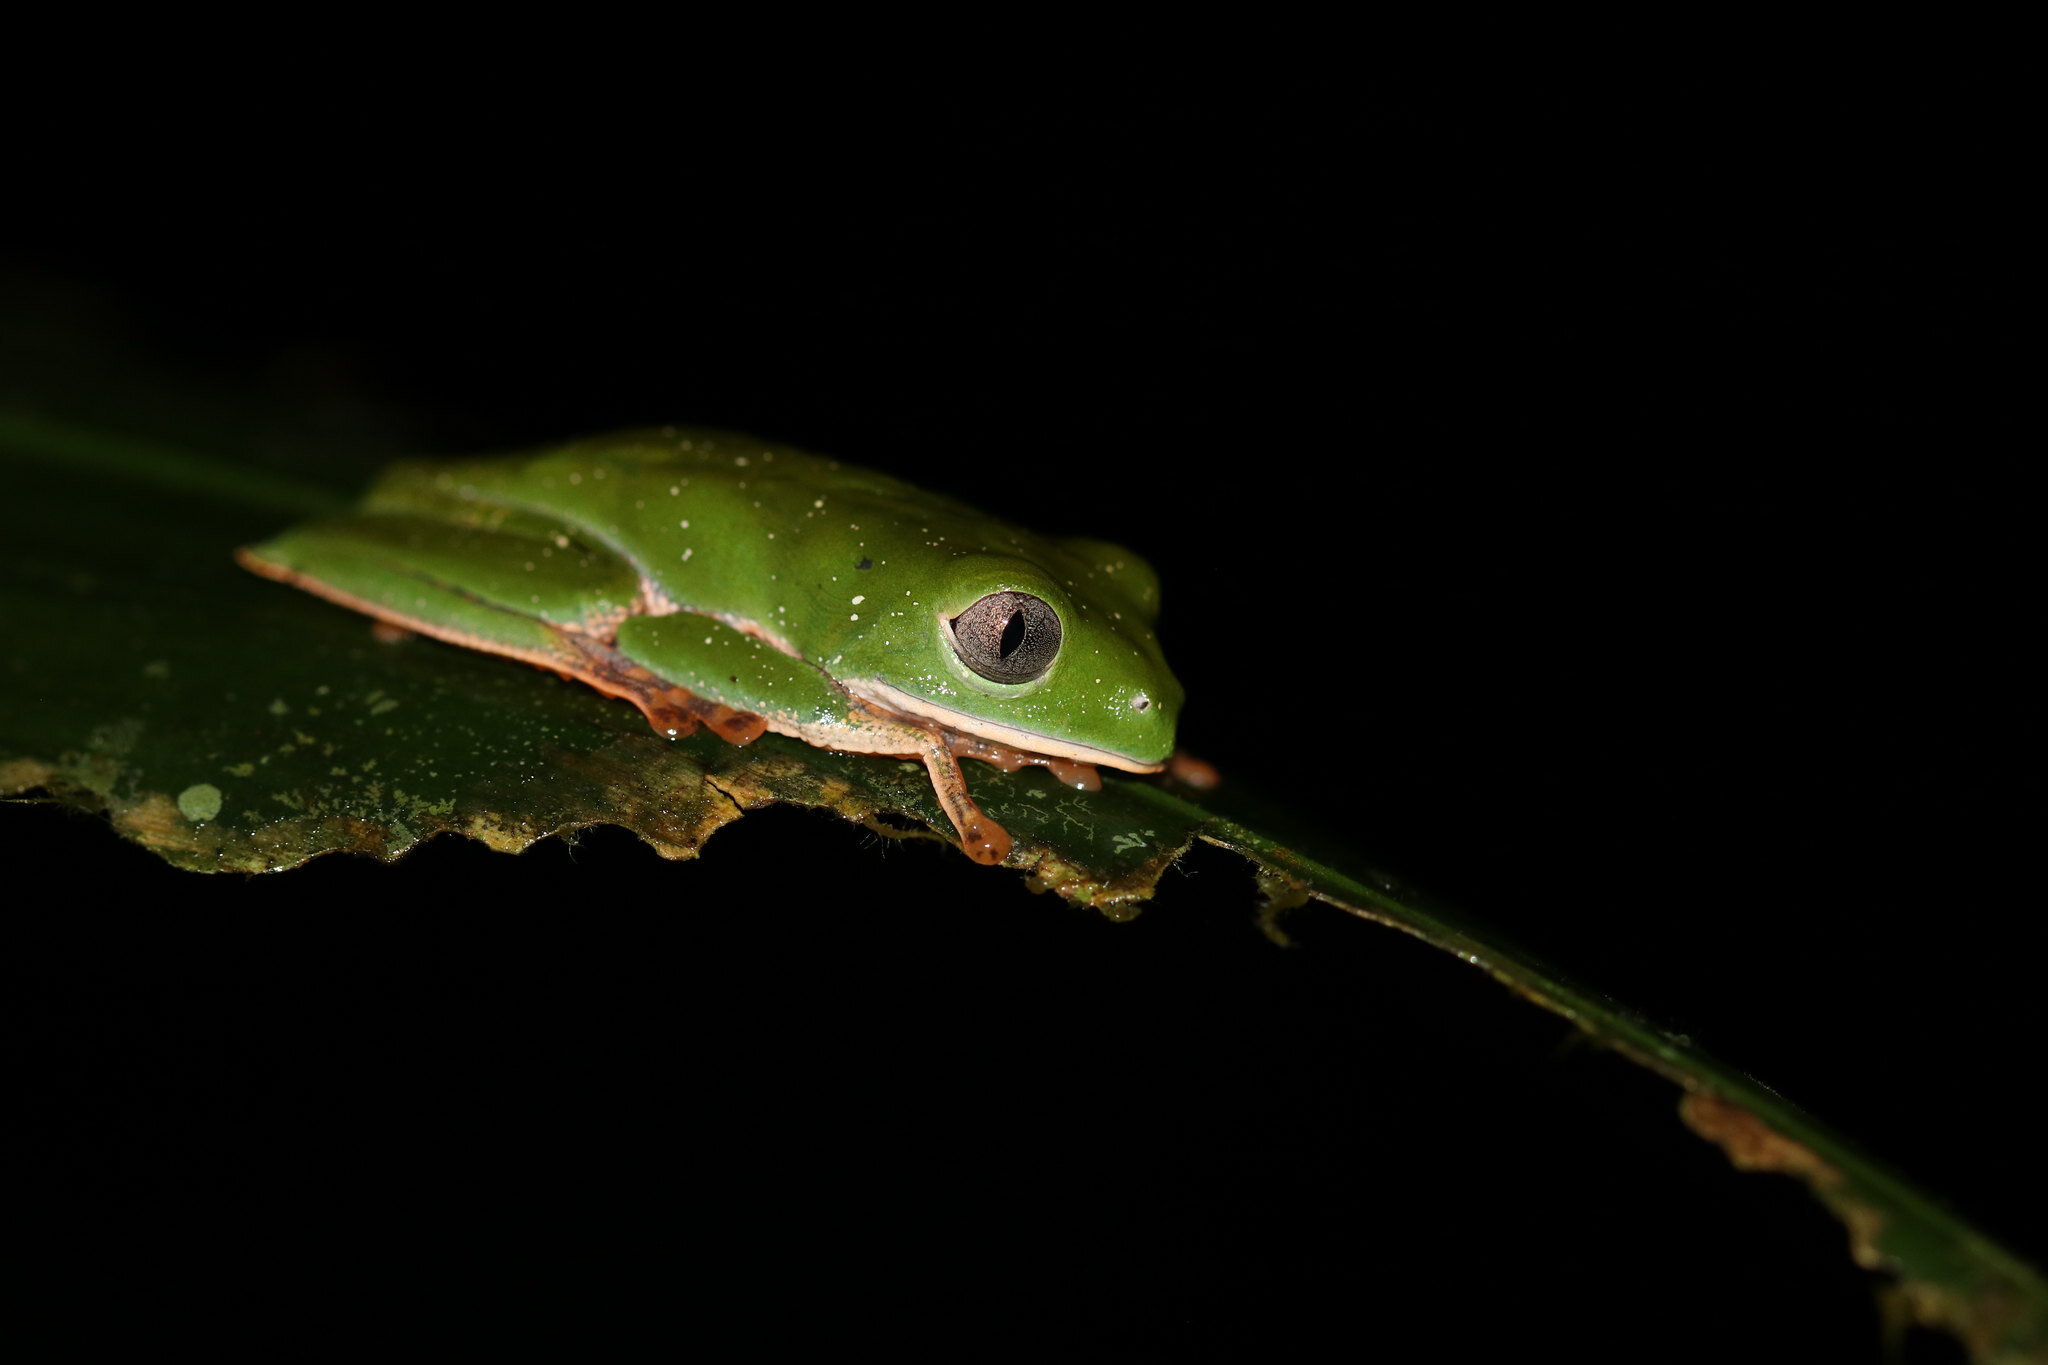 Callimedusa sp. leaf frog